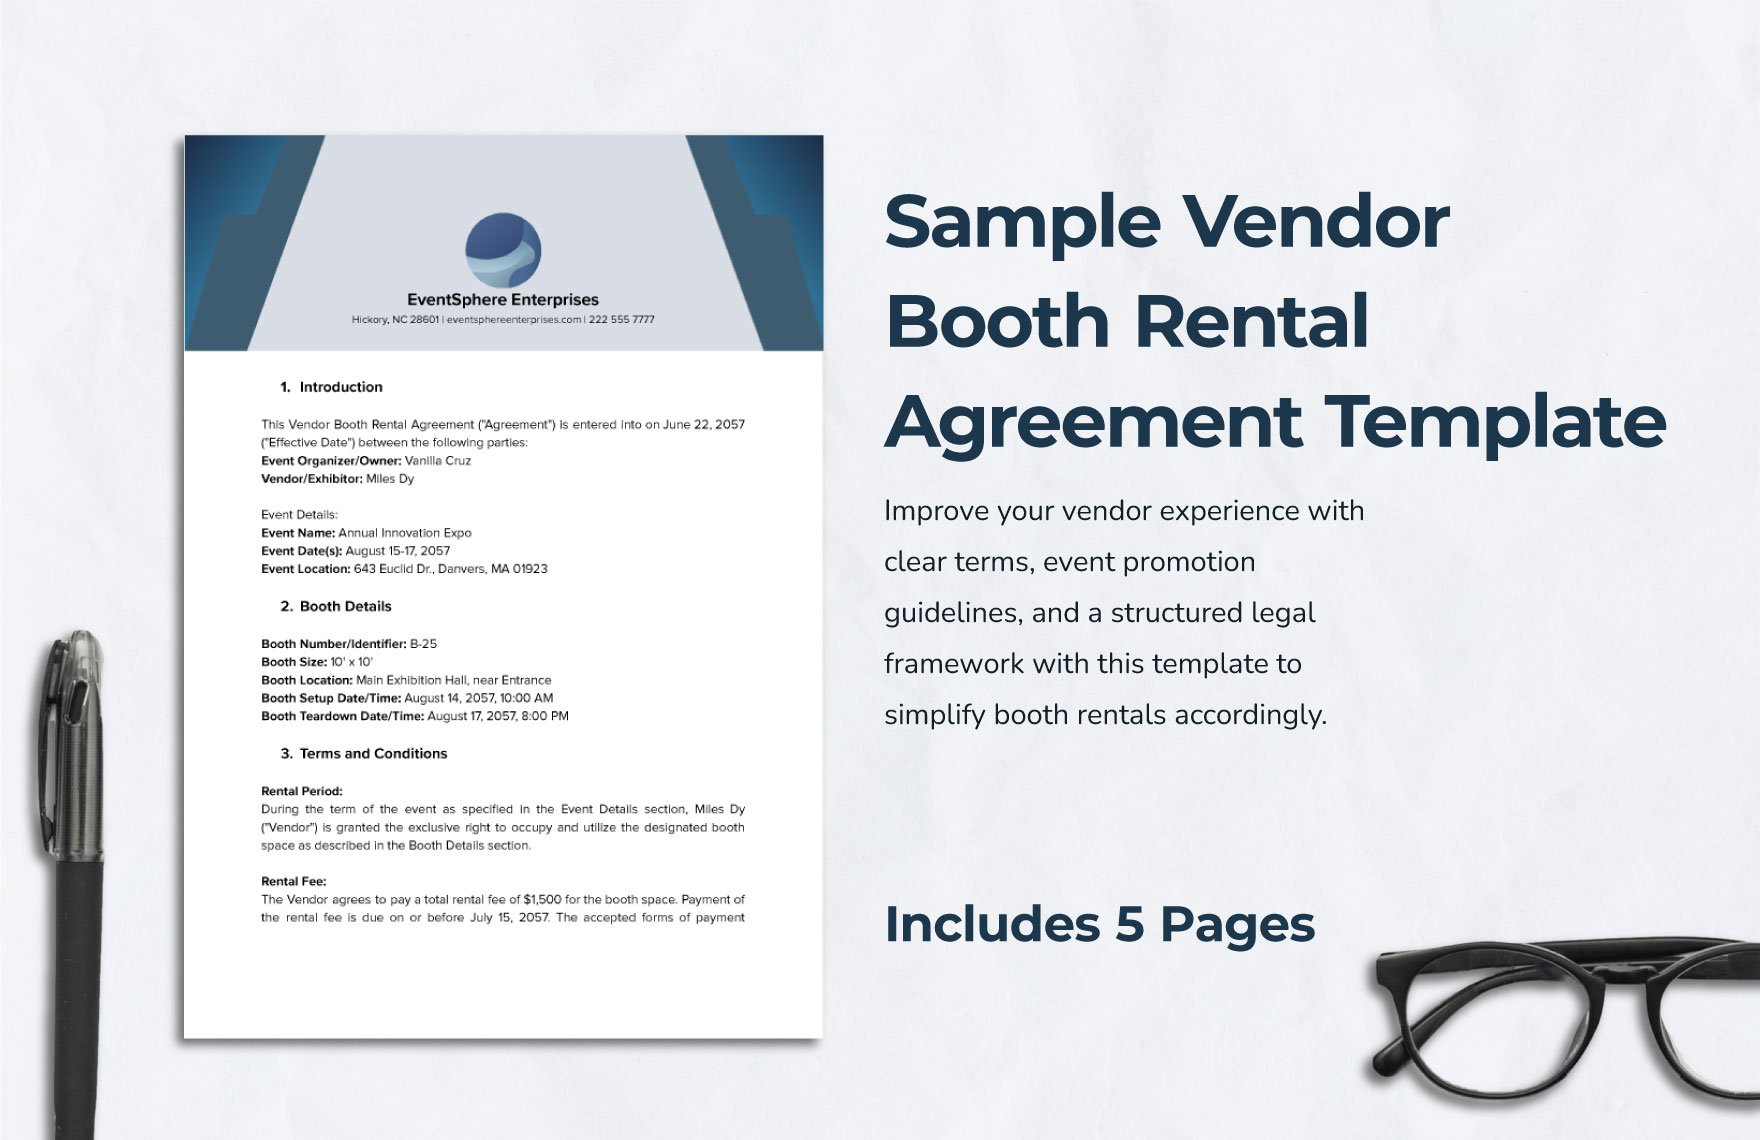 Sample Vendor Booth Rental Agreement Template